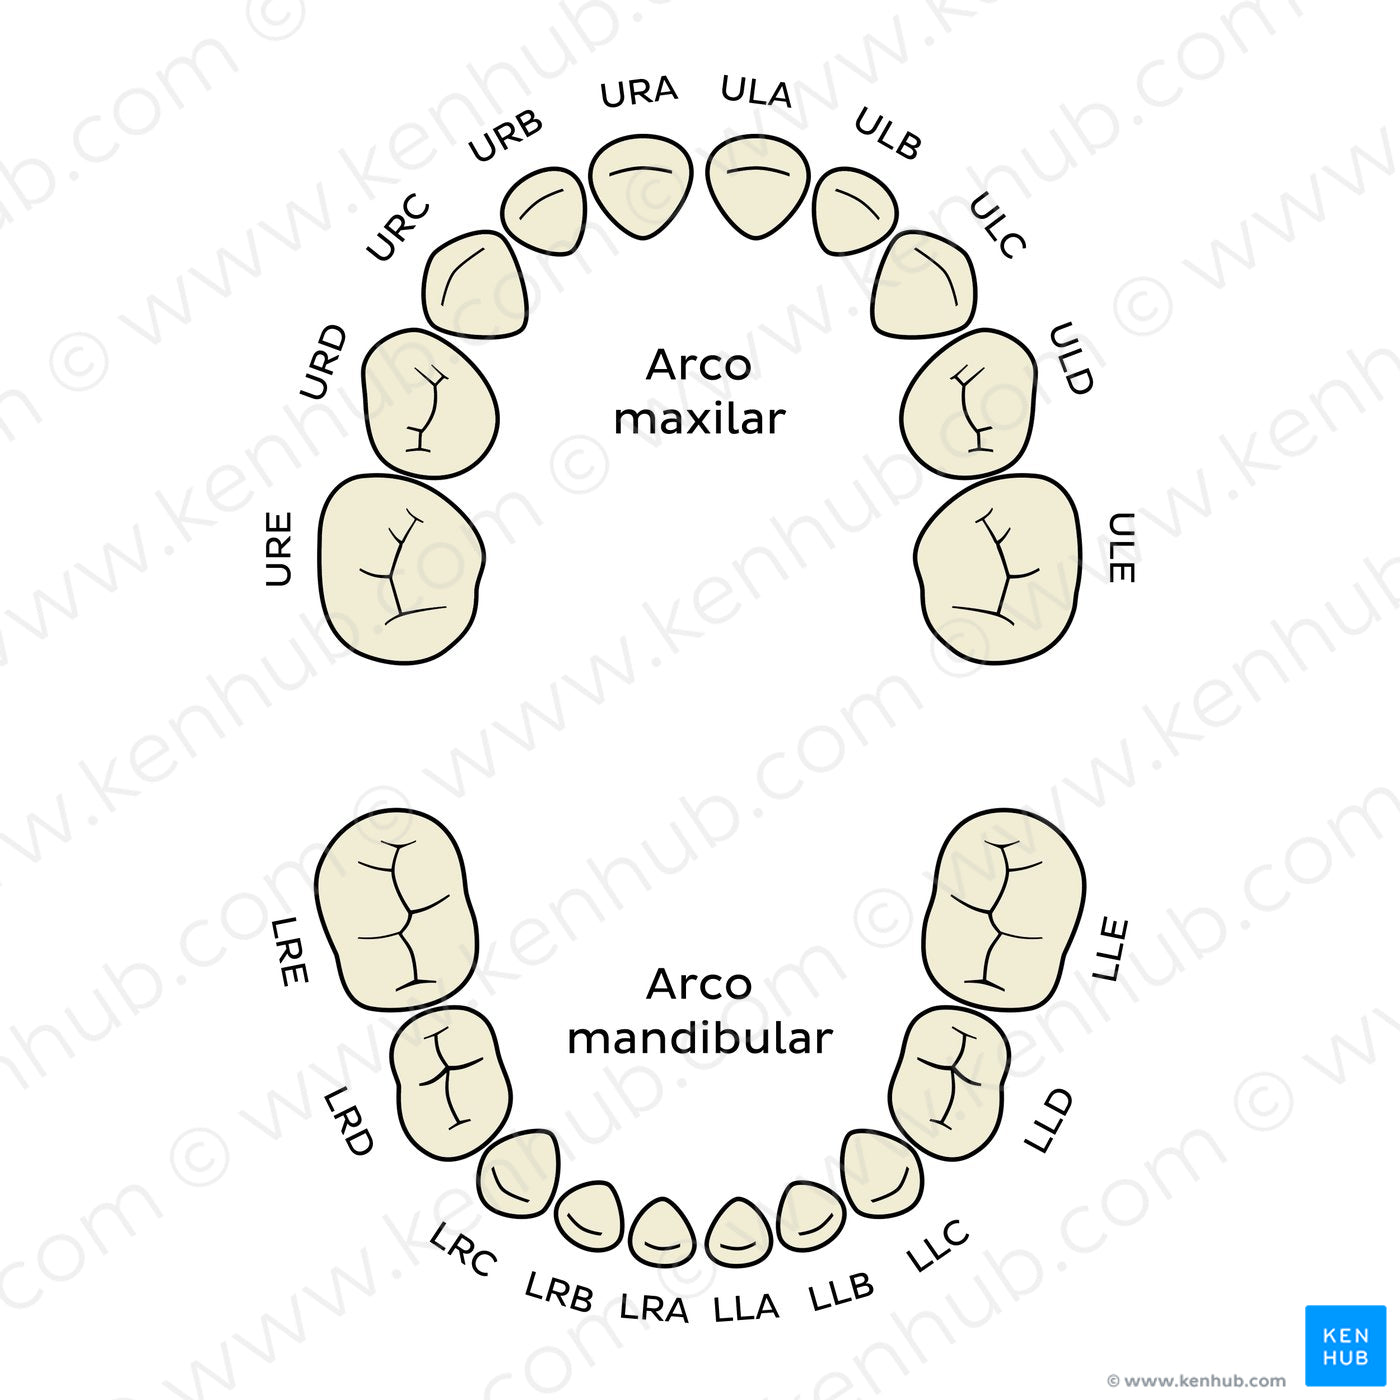 Alphanumeric Notation (deciduous teeth) (Portuguese)